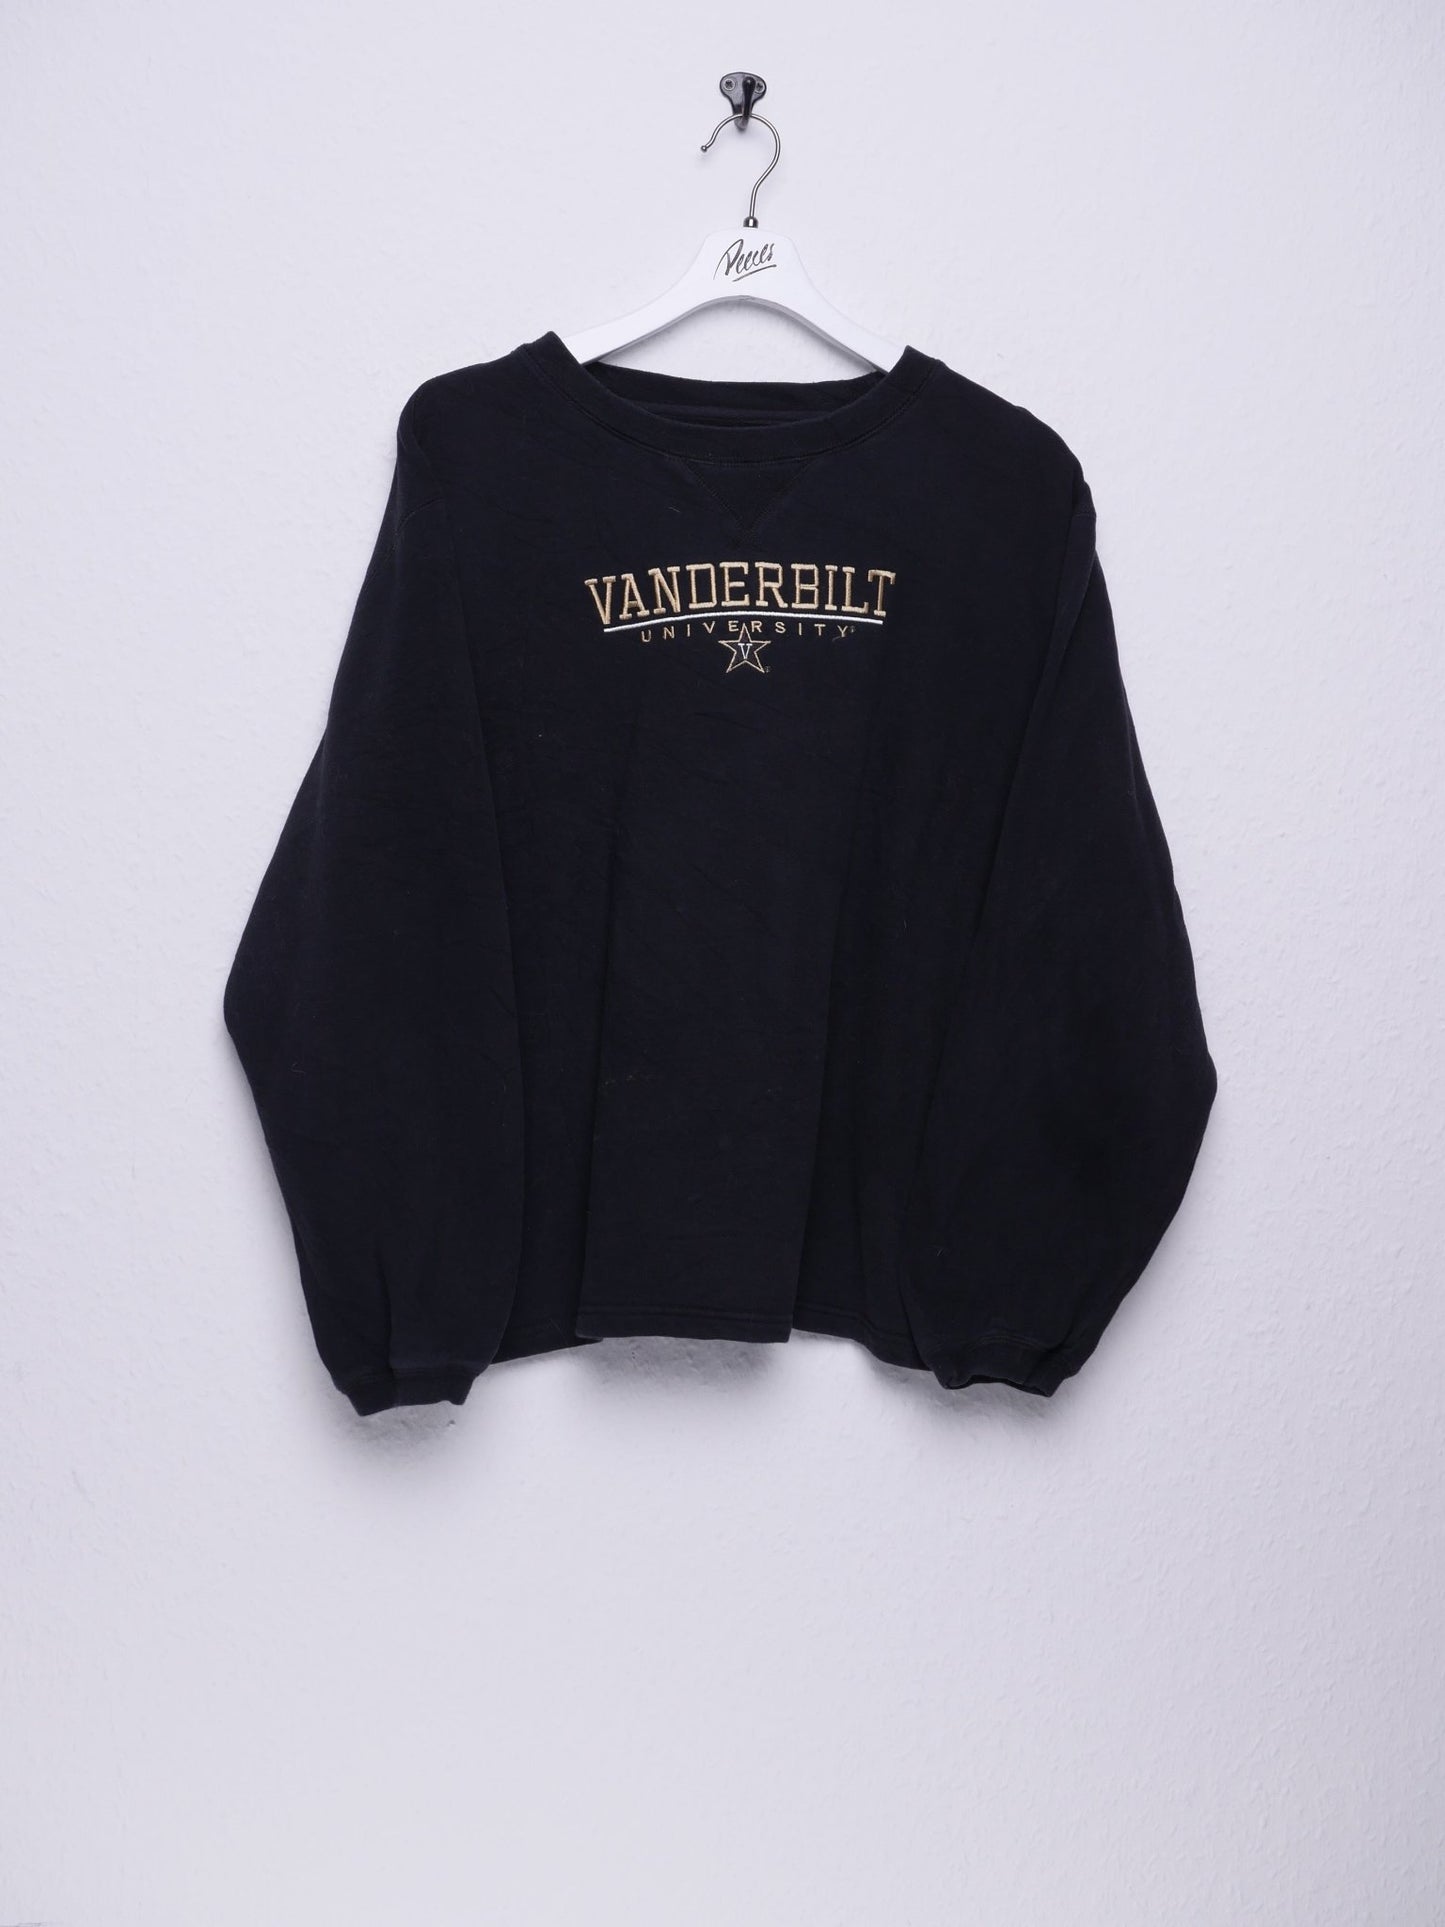 jansport Vanderbilt embroidered Spellout Vintage Sweater - Peeces